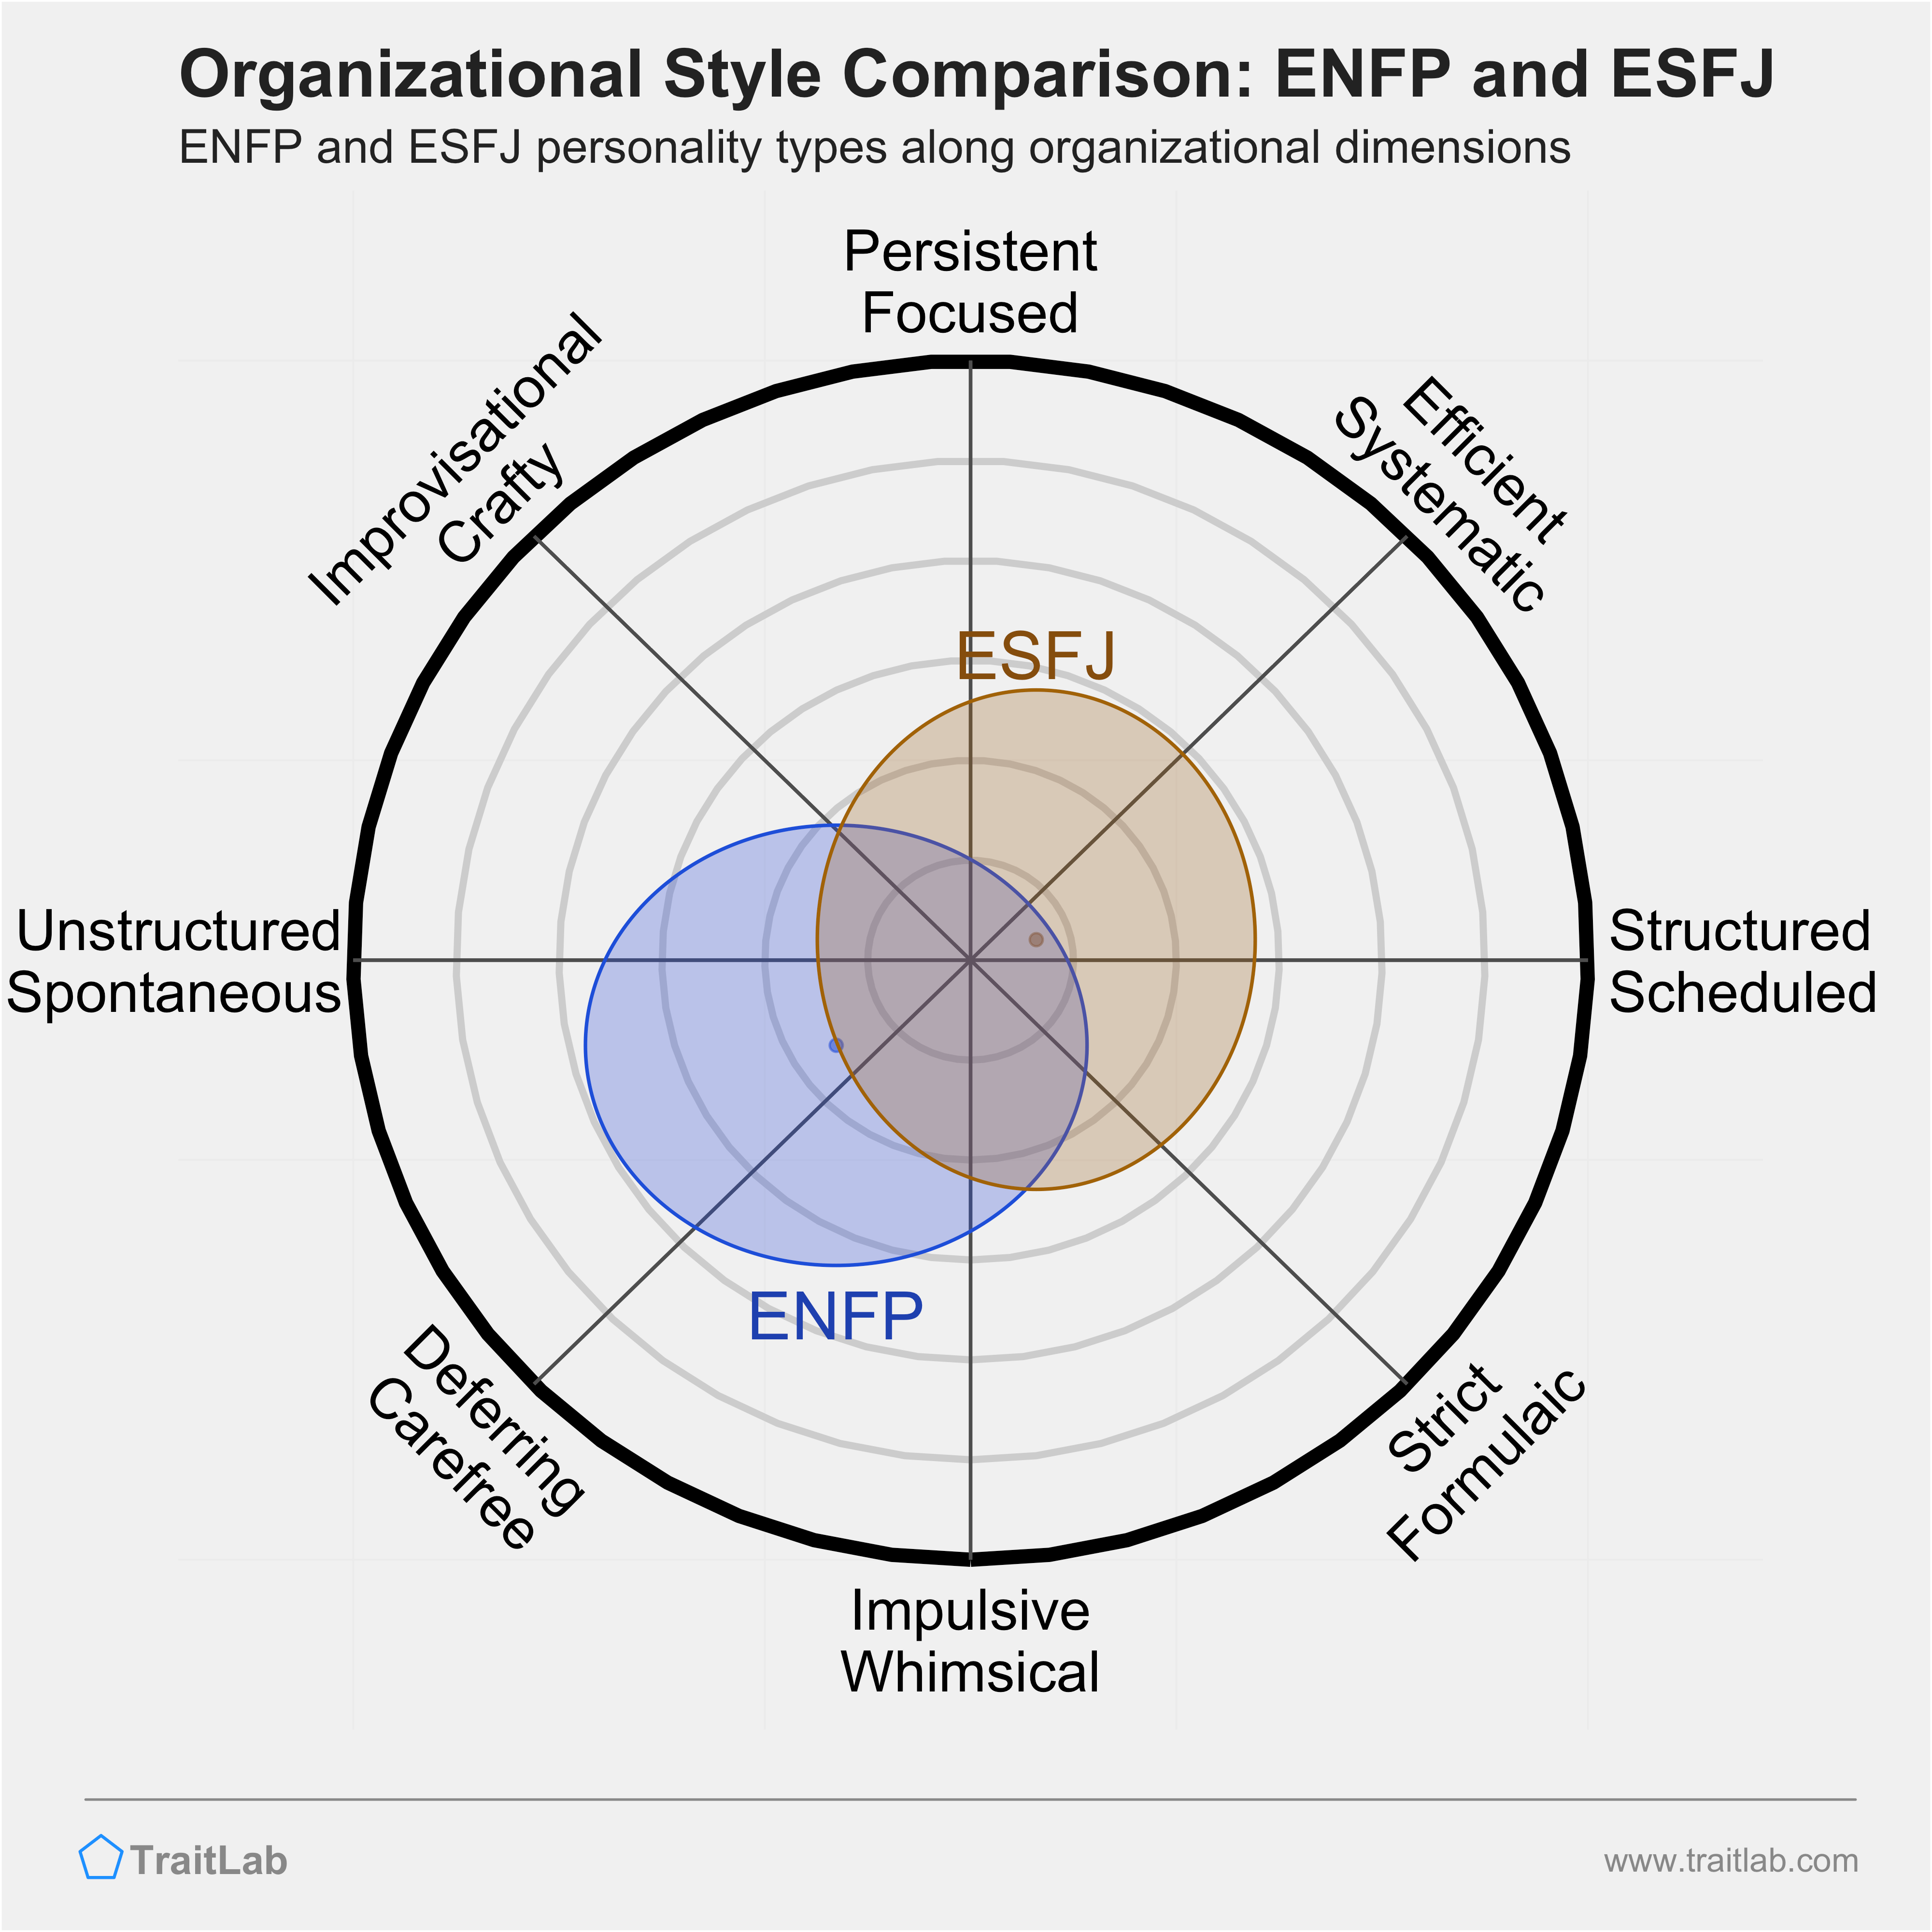 ENFP and ESFJ comparison across organizational dimensions